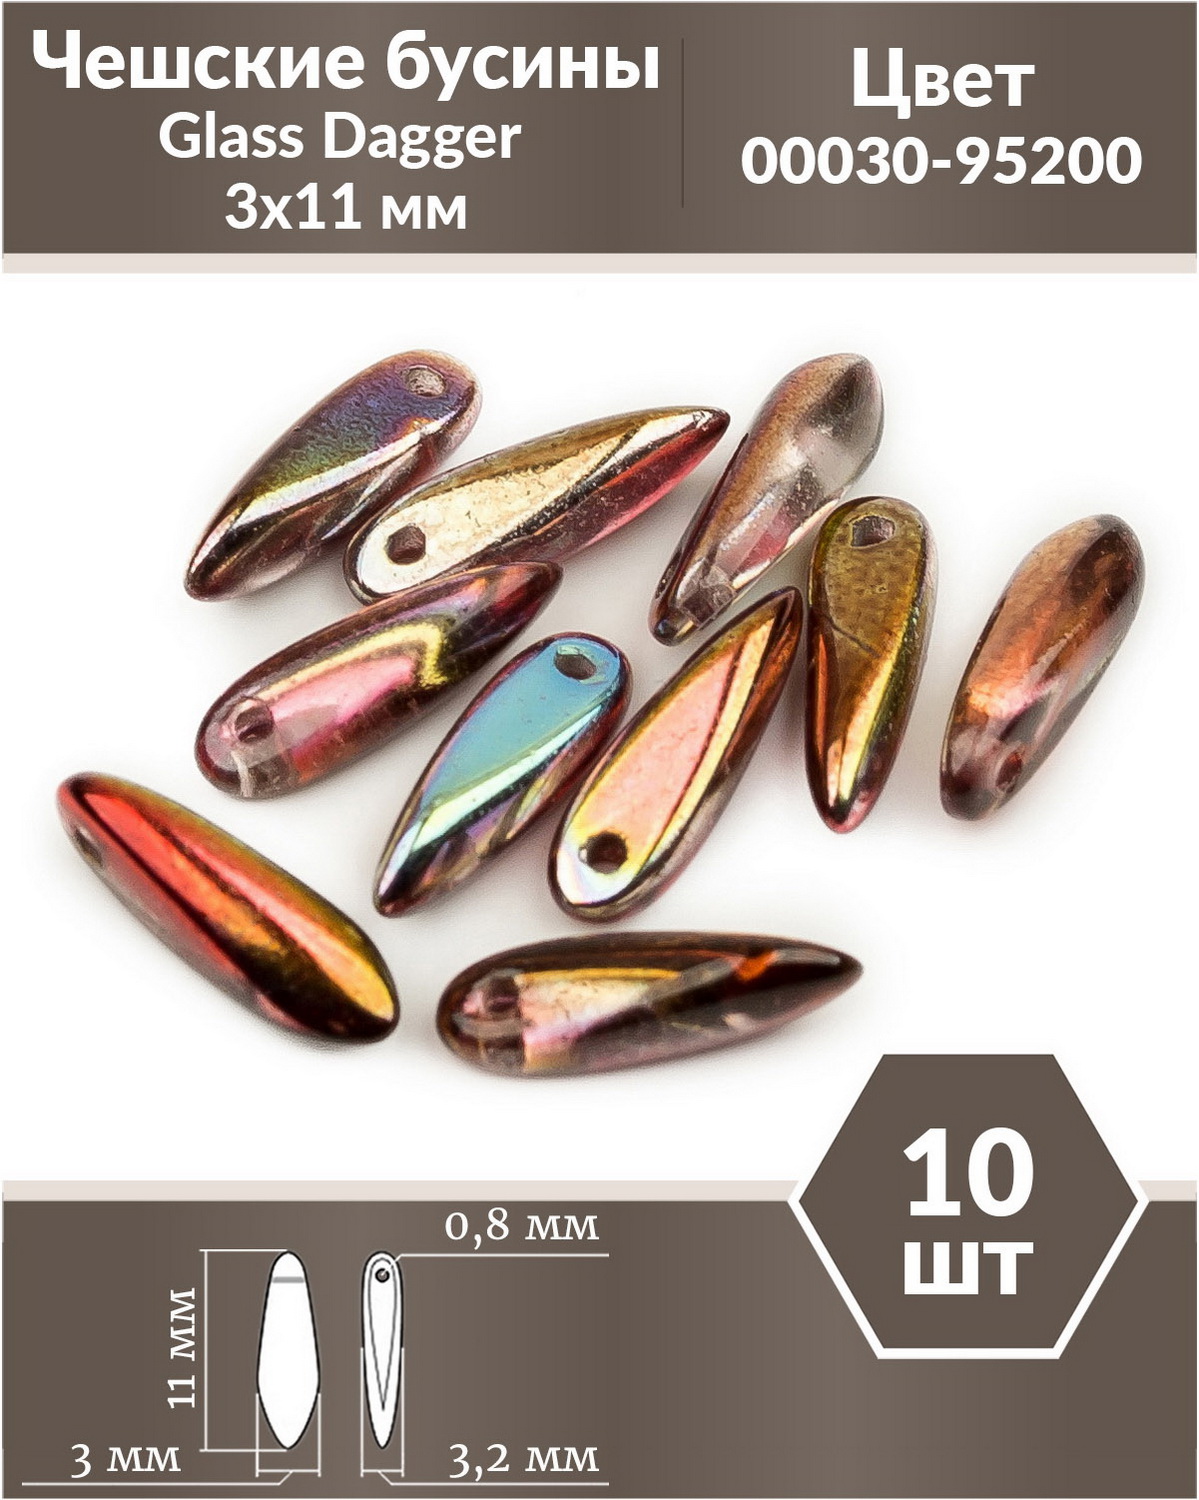 Чешские бусины Czech Beads Glass Dagger, 3х11 мм, Crystal Magic Wine 10 шт